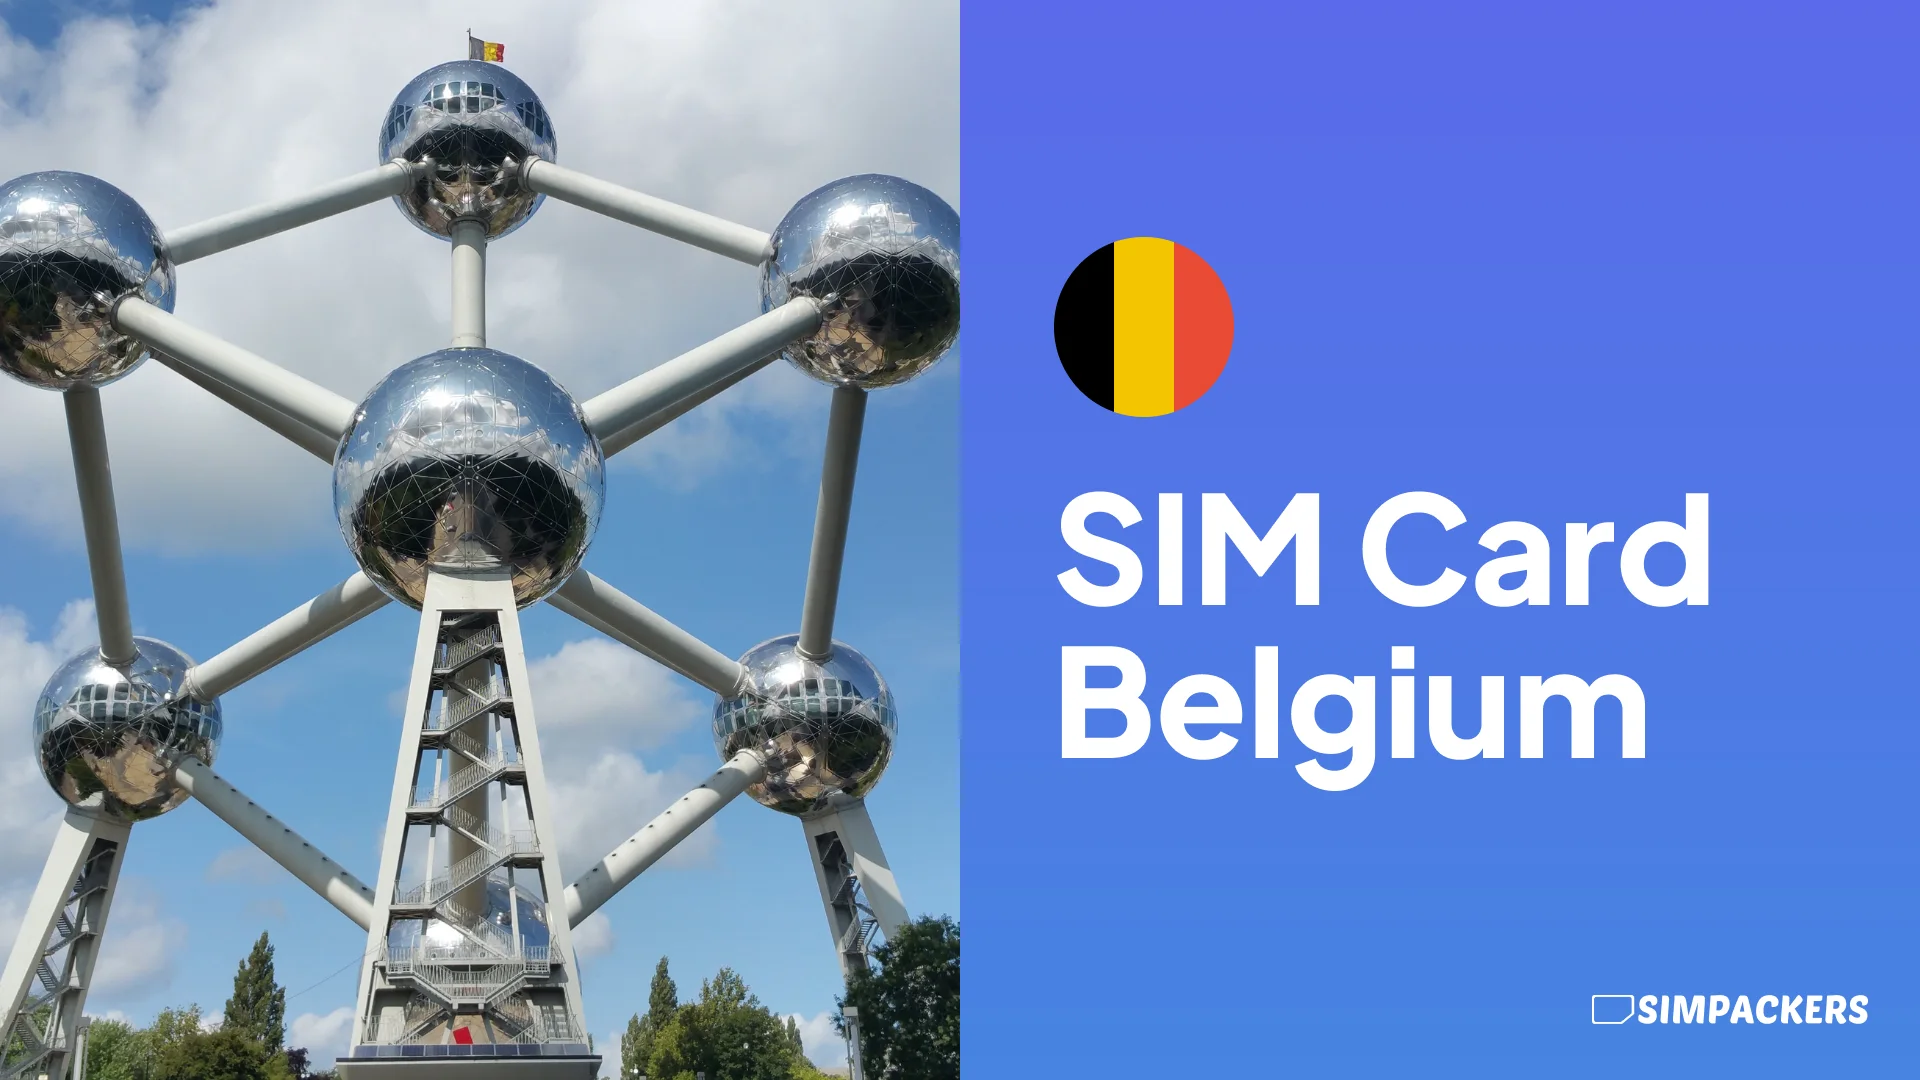 EN/FEATURED_IMAGES/sim-card-belgium.webp